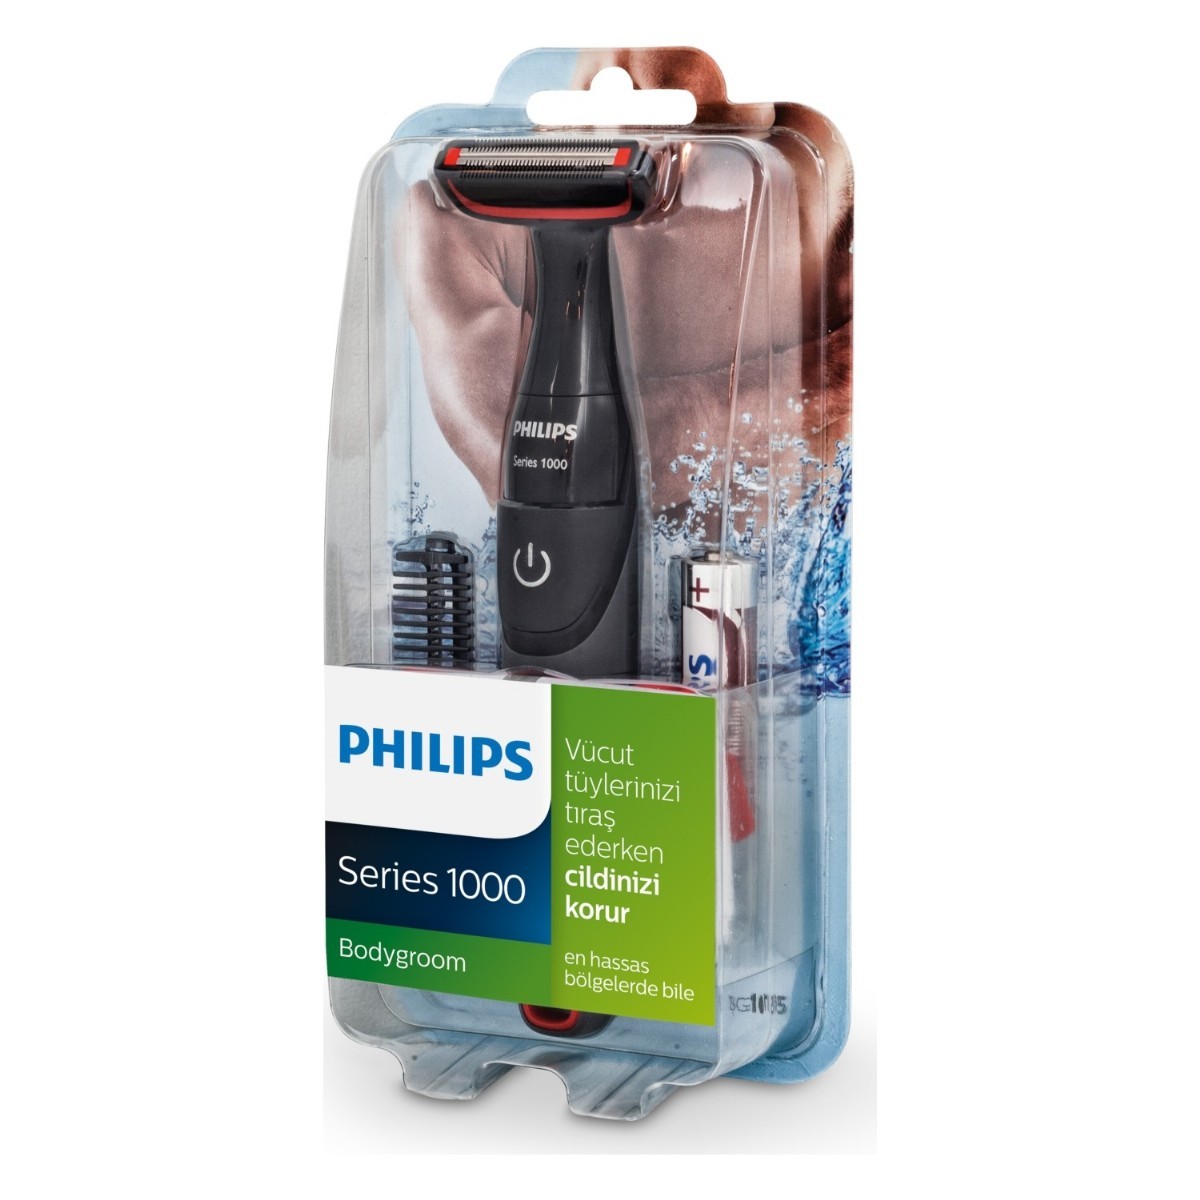  Tıraş Makinesi | Philips Bodygroom 1000 Serisi BG105/11 Pilli Vücut Tıraş Makinesi | BG105/11 | Philips Bodygroom 1000 Serisi BG105/11 Pilli Vücut Tıraş Makinesi, Philips BG105/11, Philips bg 105 fiyat | 